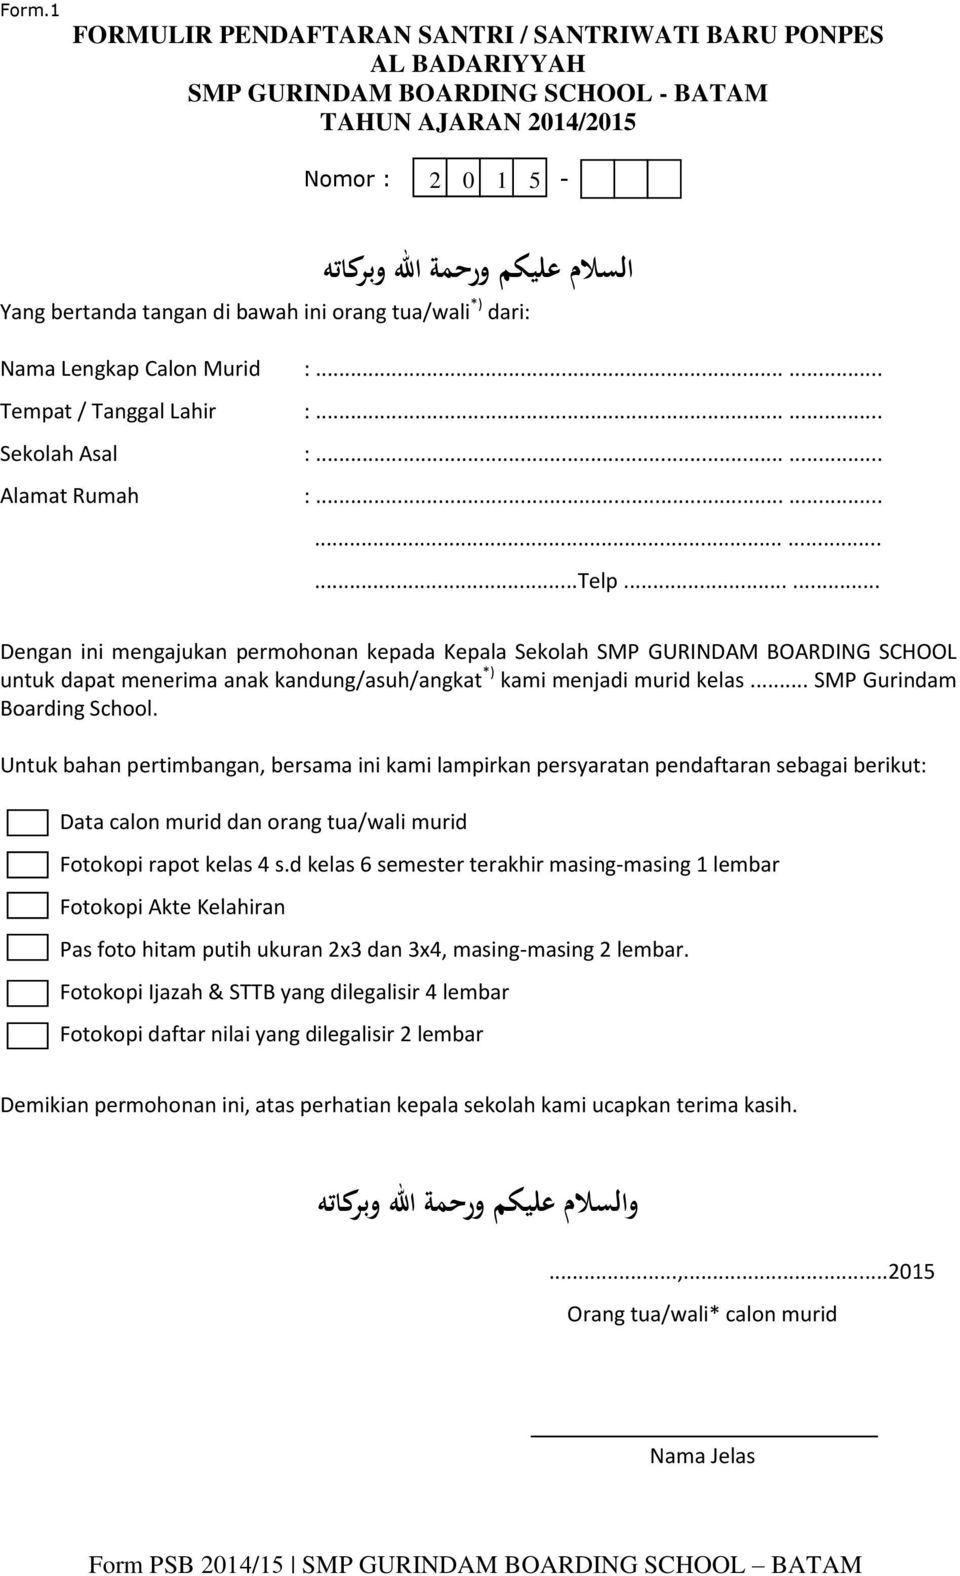 Detail Contoh Formulir Pendaftaran Smp Nomer 50